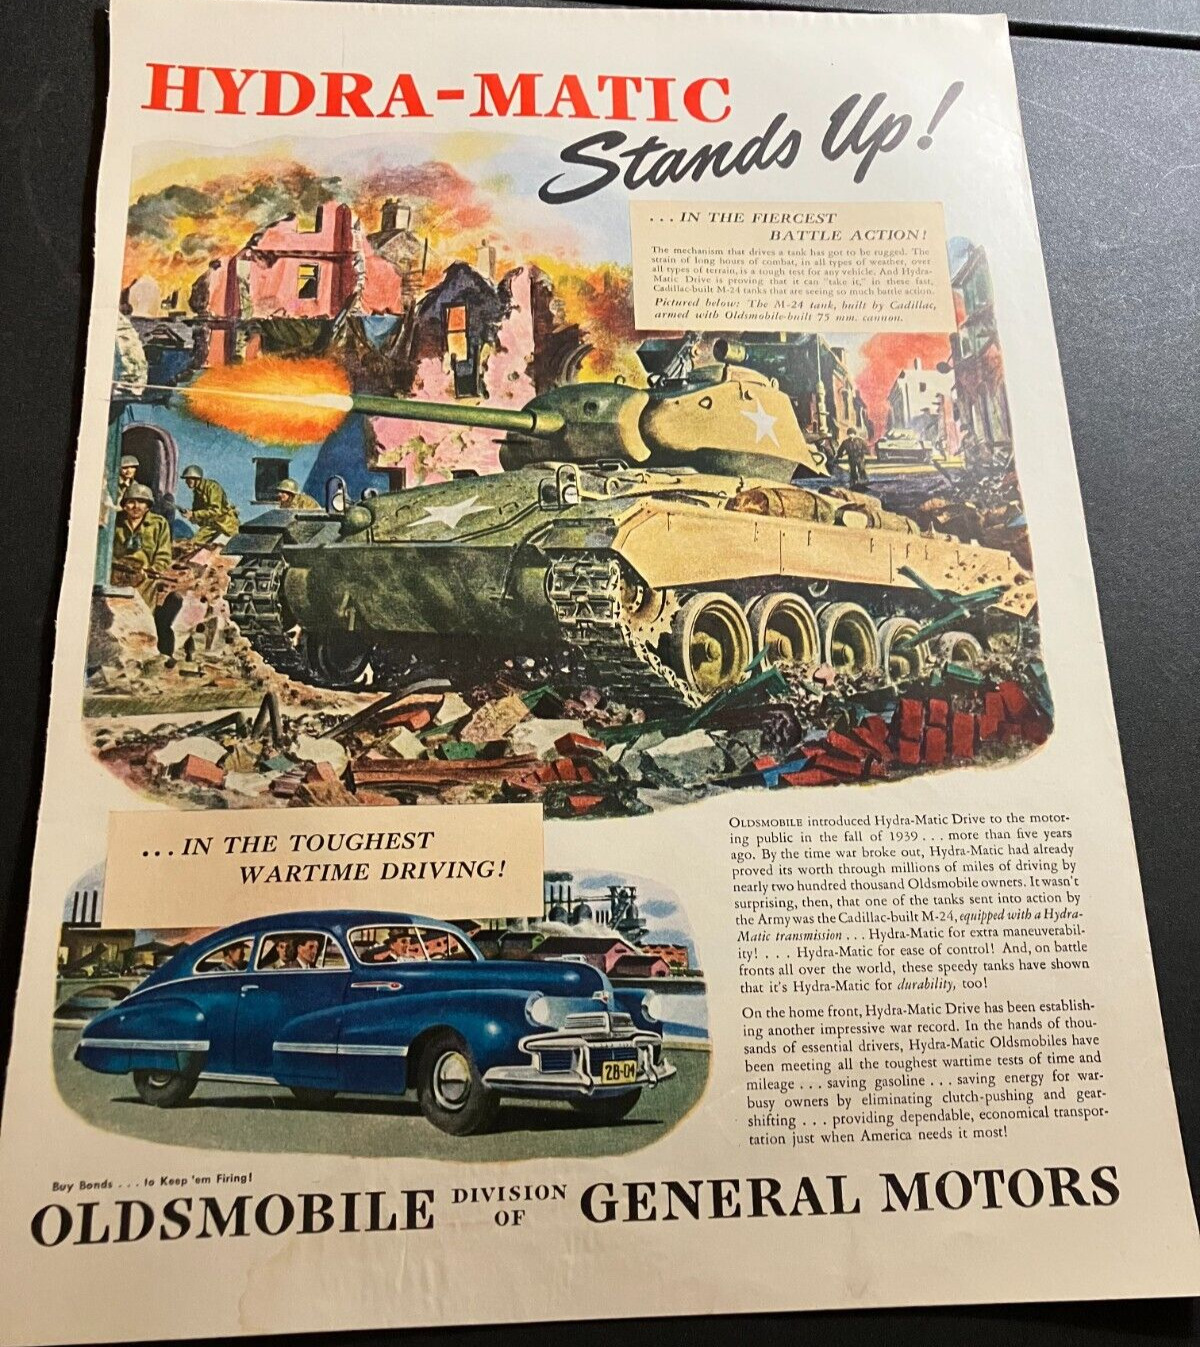 WW2 1940s Oldsmobile Hydra-Matic M-24 Tank - Vintage Original Print Ad Wall Art